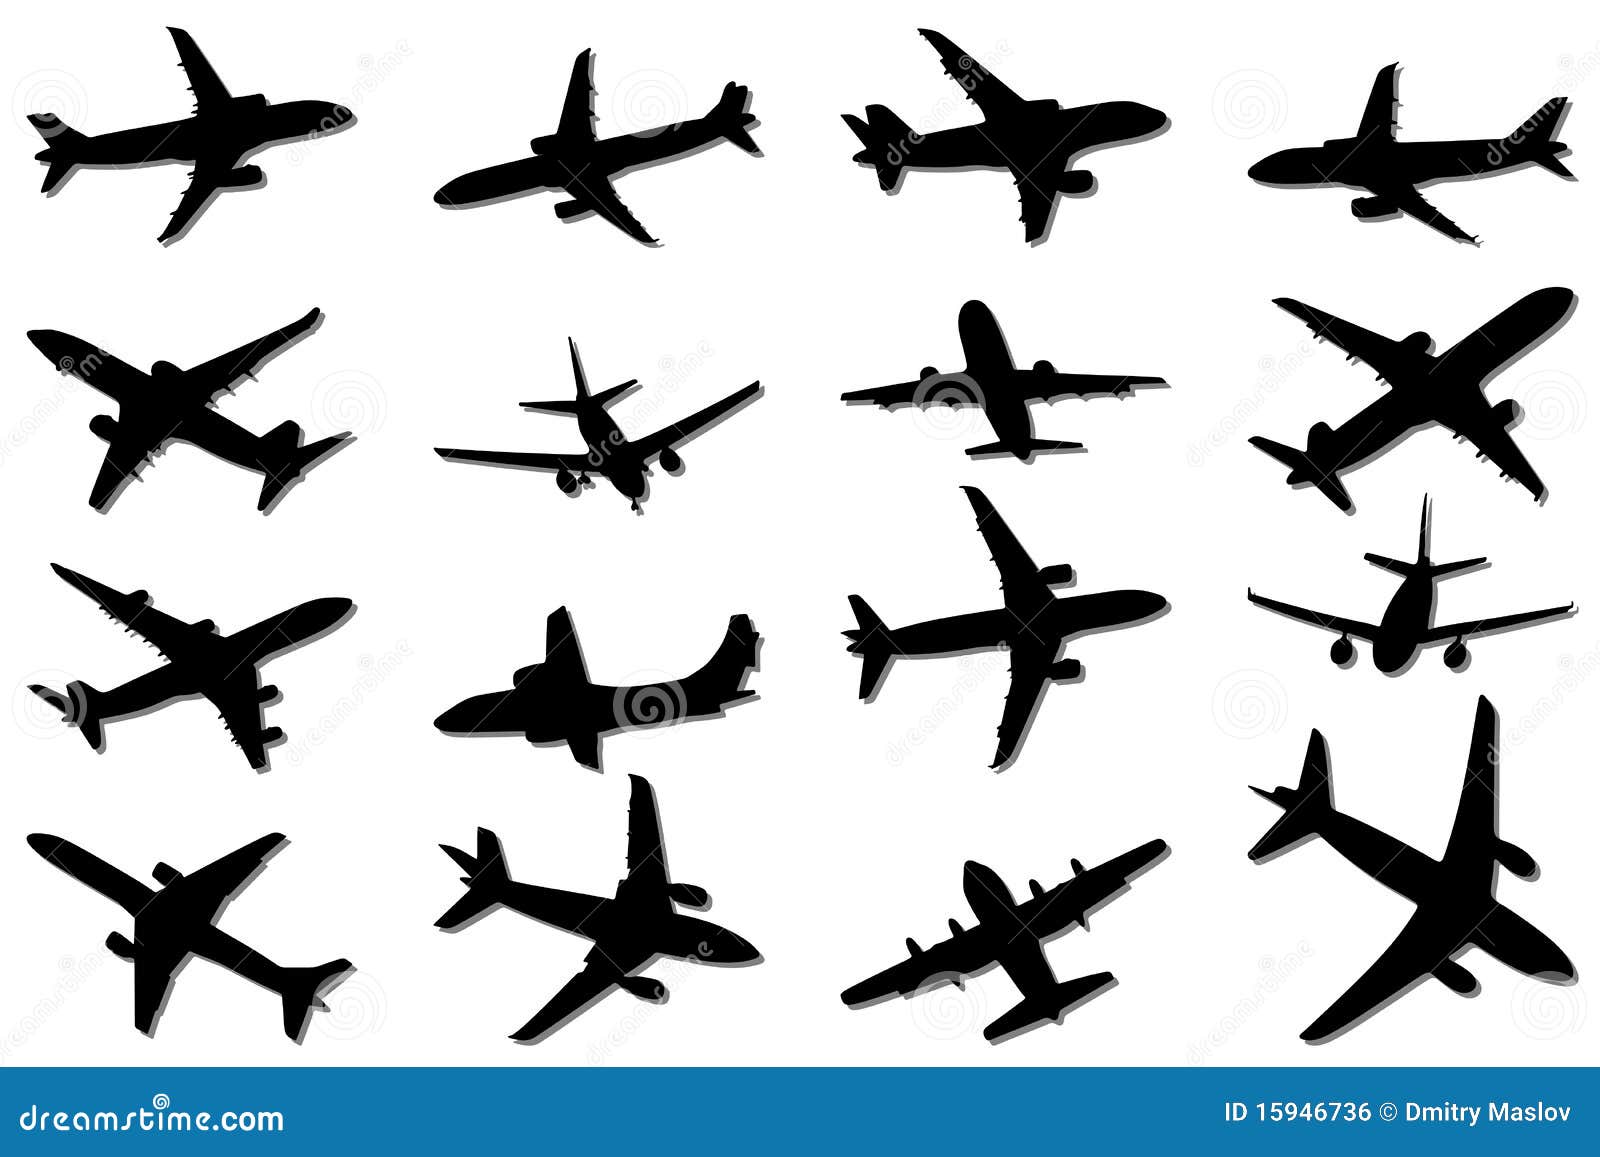 Plane Silhouettes stock vector. Illustration of flight - 15946736